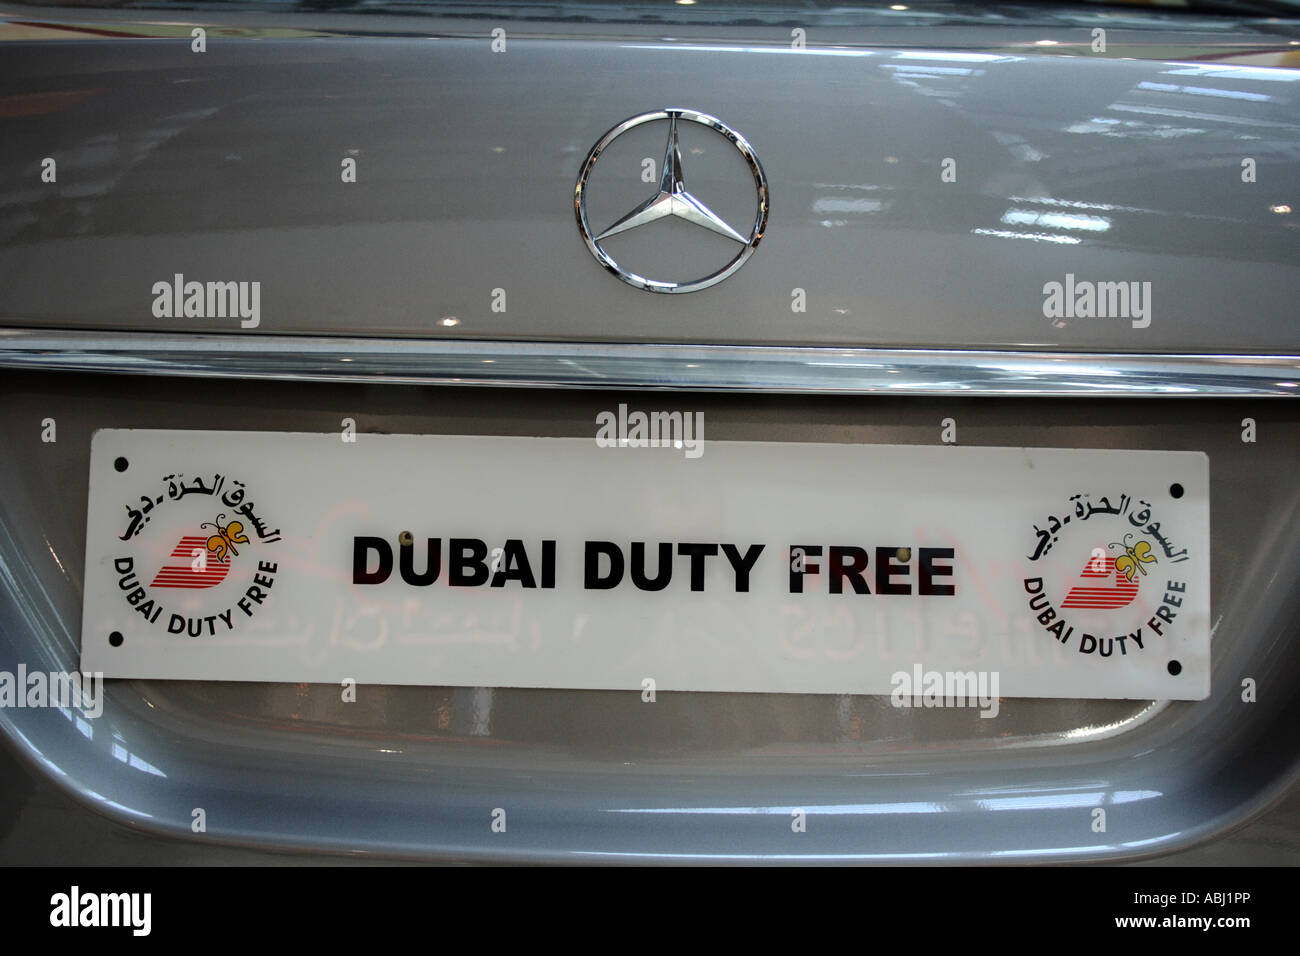 Emirati Arabi Uniti Dubai International Airport, lotteria auto duty free, Mercedes Benz. Foto di Willy Matheisl Foto Stock